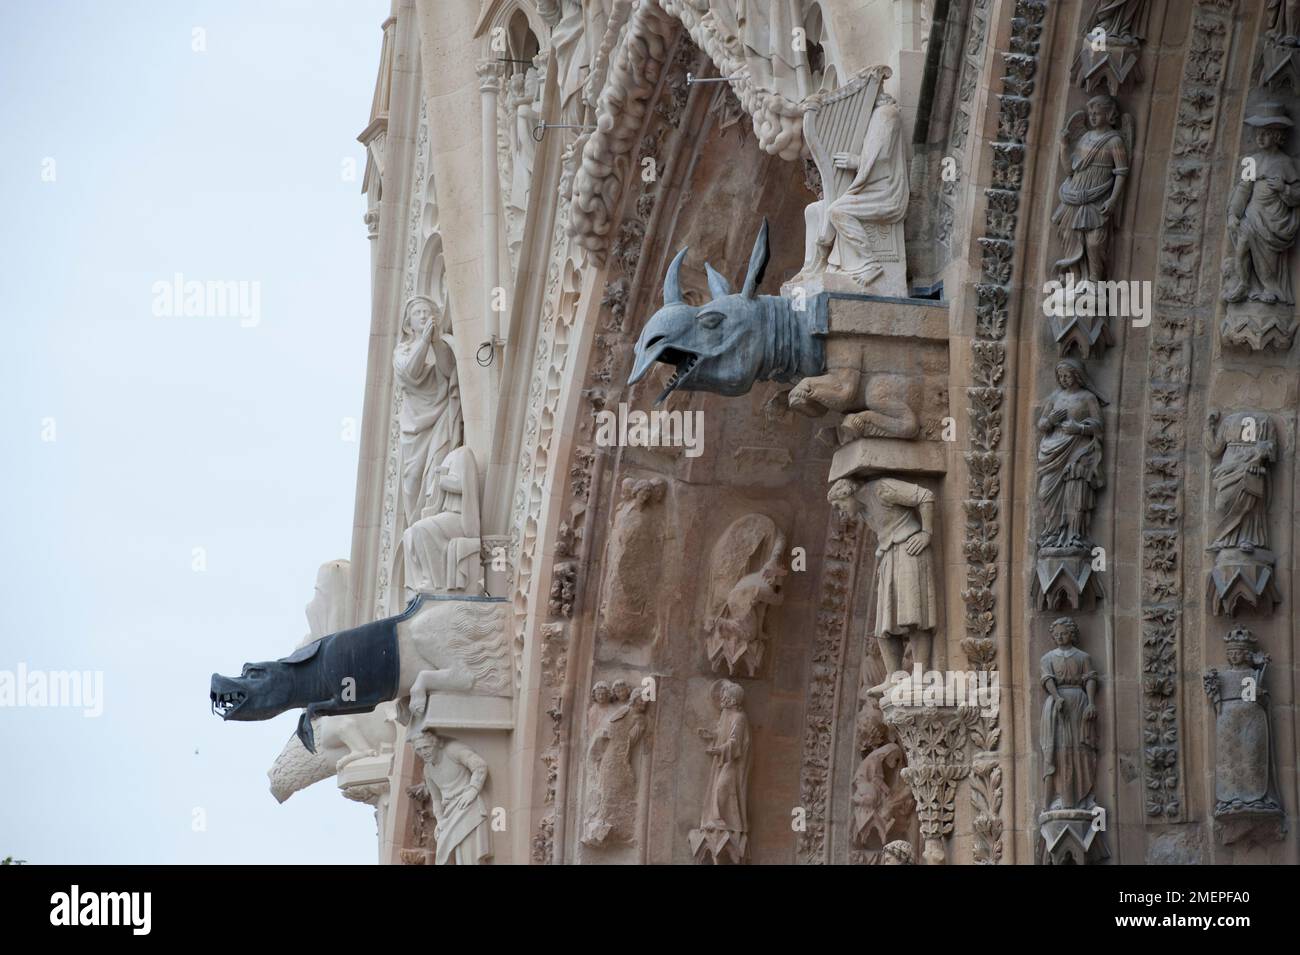 France, Marne, Reims (Rheims), Reims Cathedral, gargoyles Stock Photo